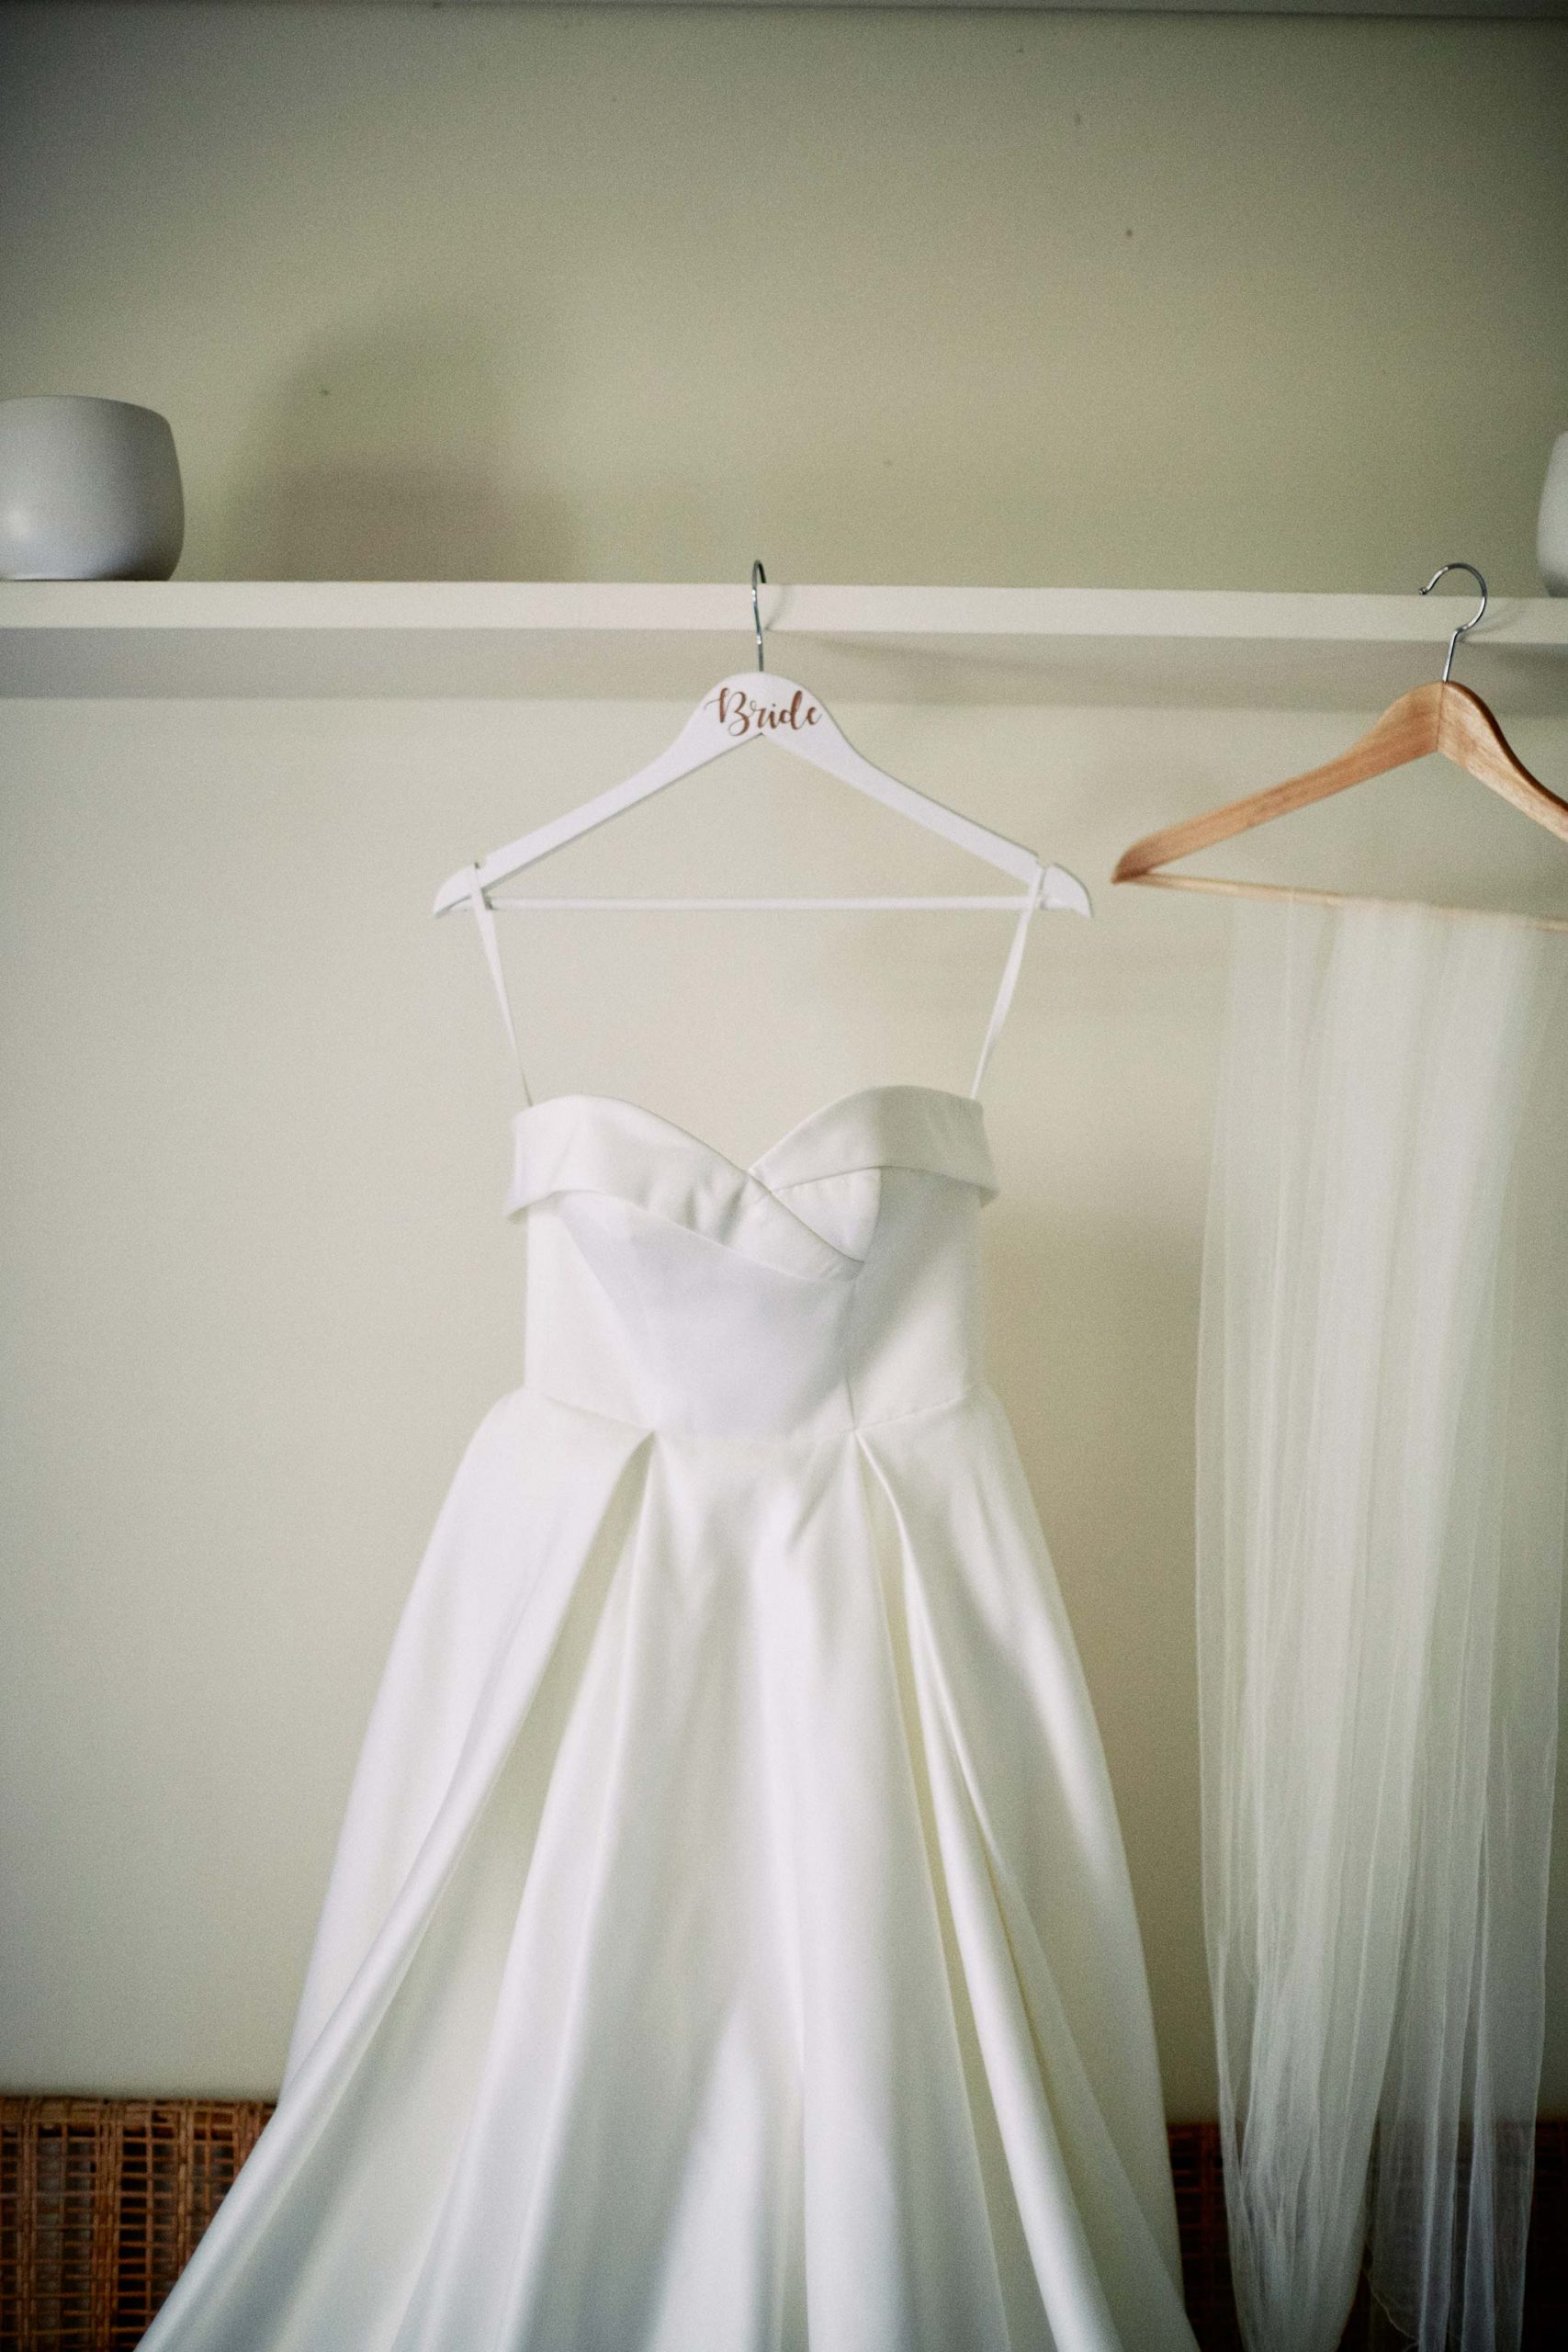 East-Melbourne-Wedding-Getting-Ready-dress